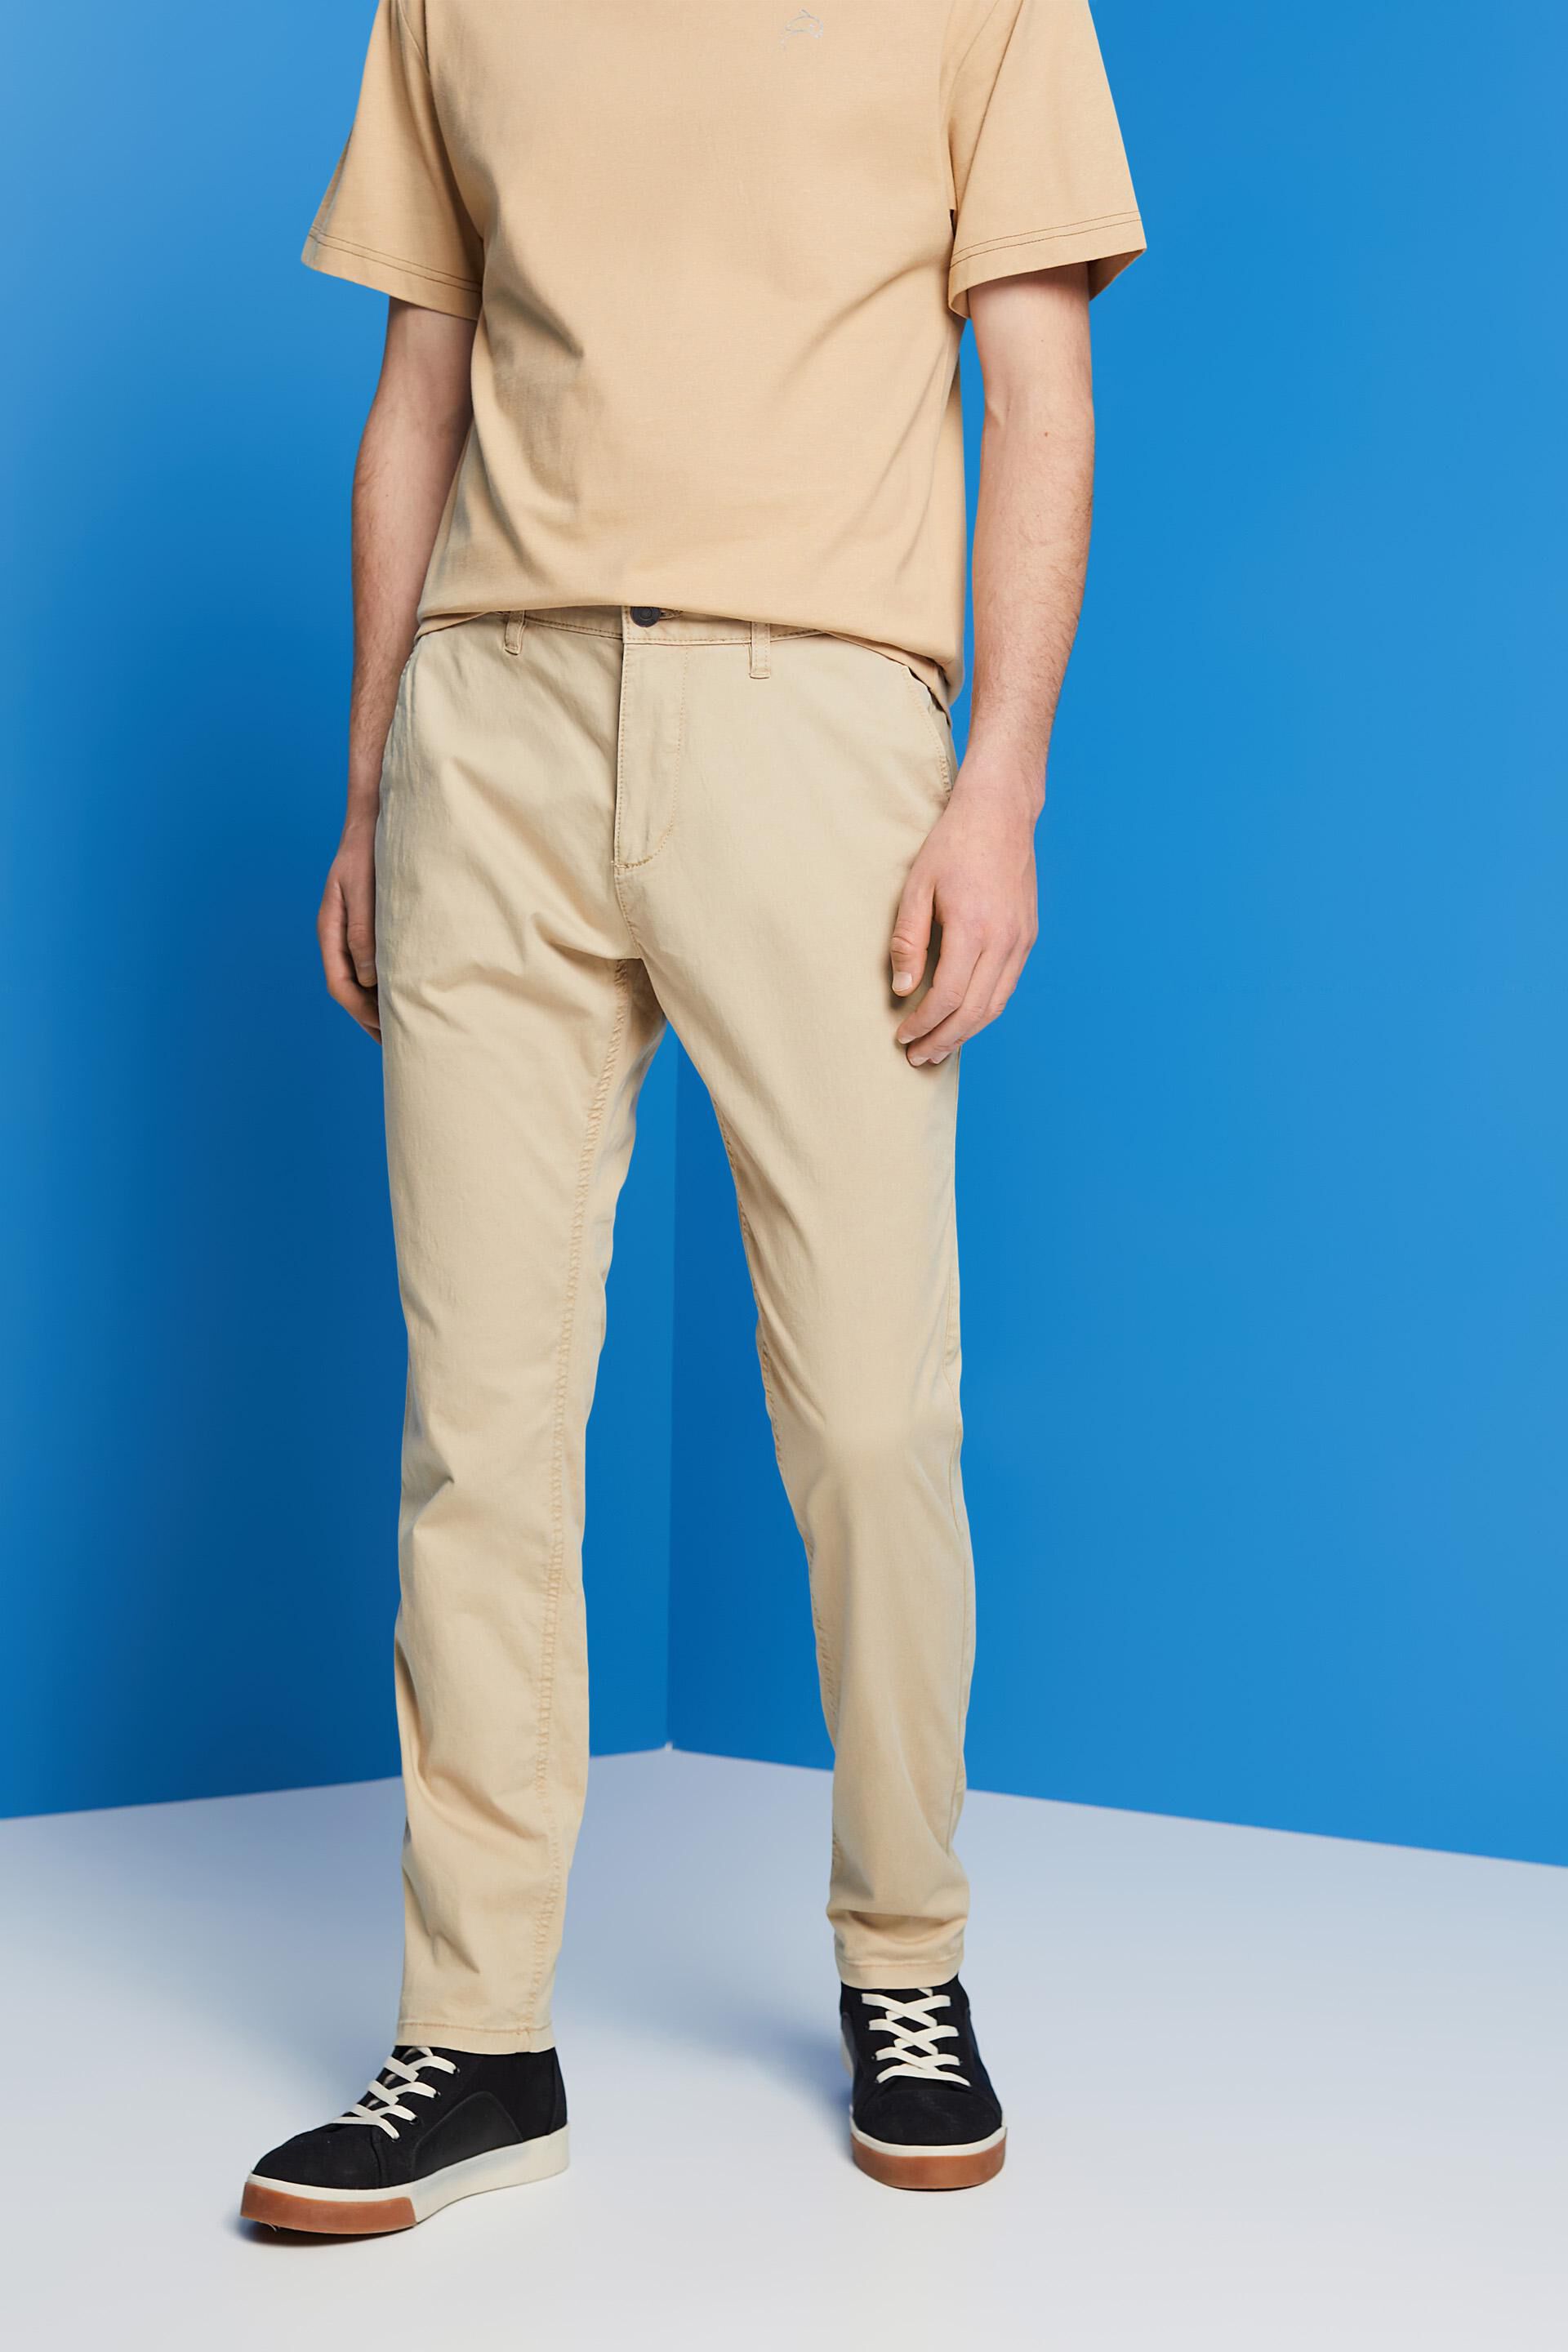 BASICS Casual Trouser for Men Online at Best Price on Paytm Mall